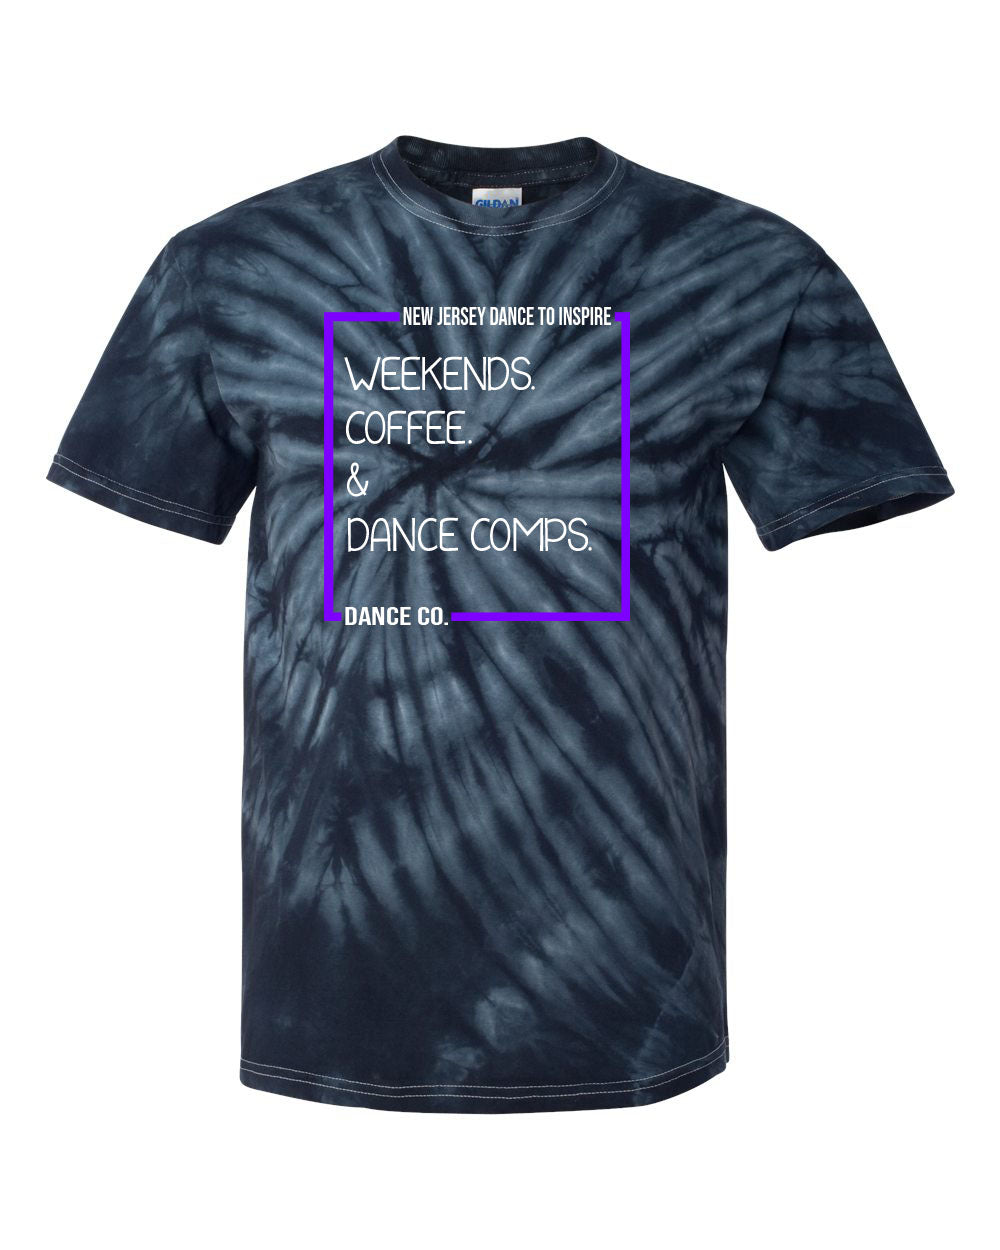 NJ Dance Tie Dye t-shirt Design 17